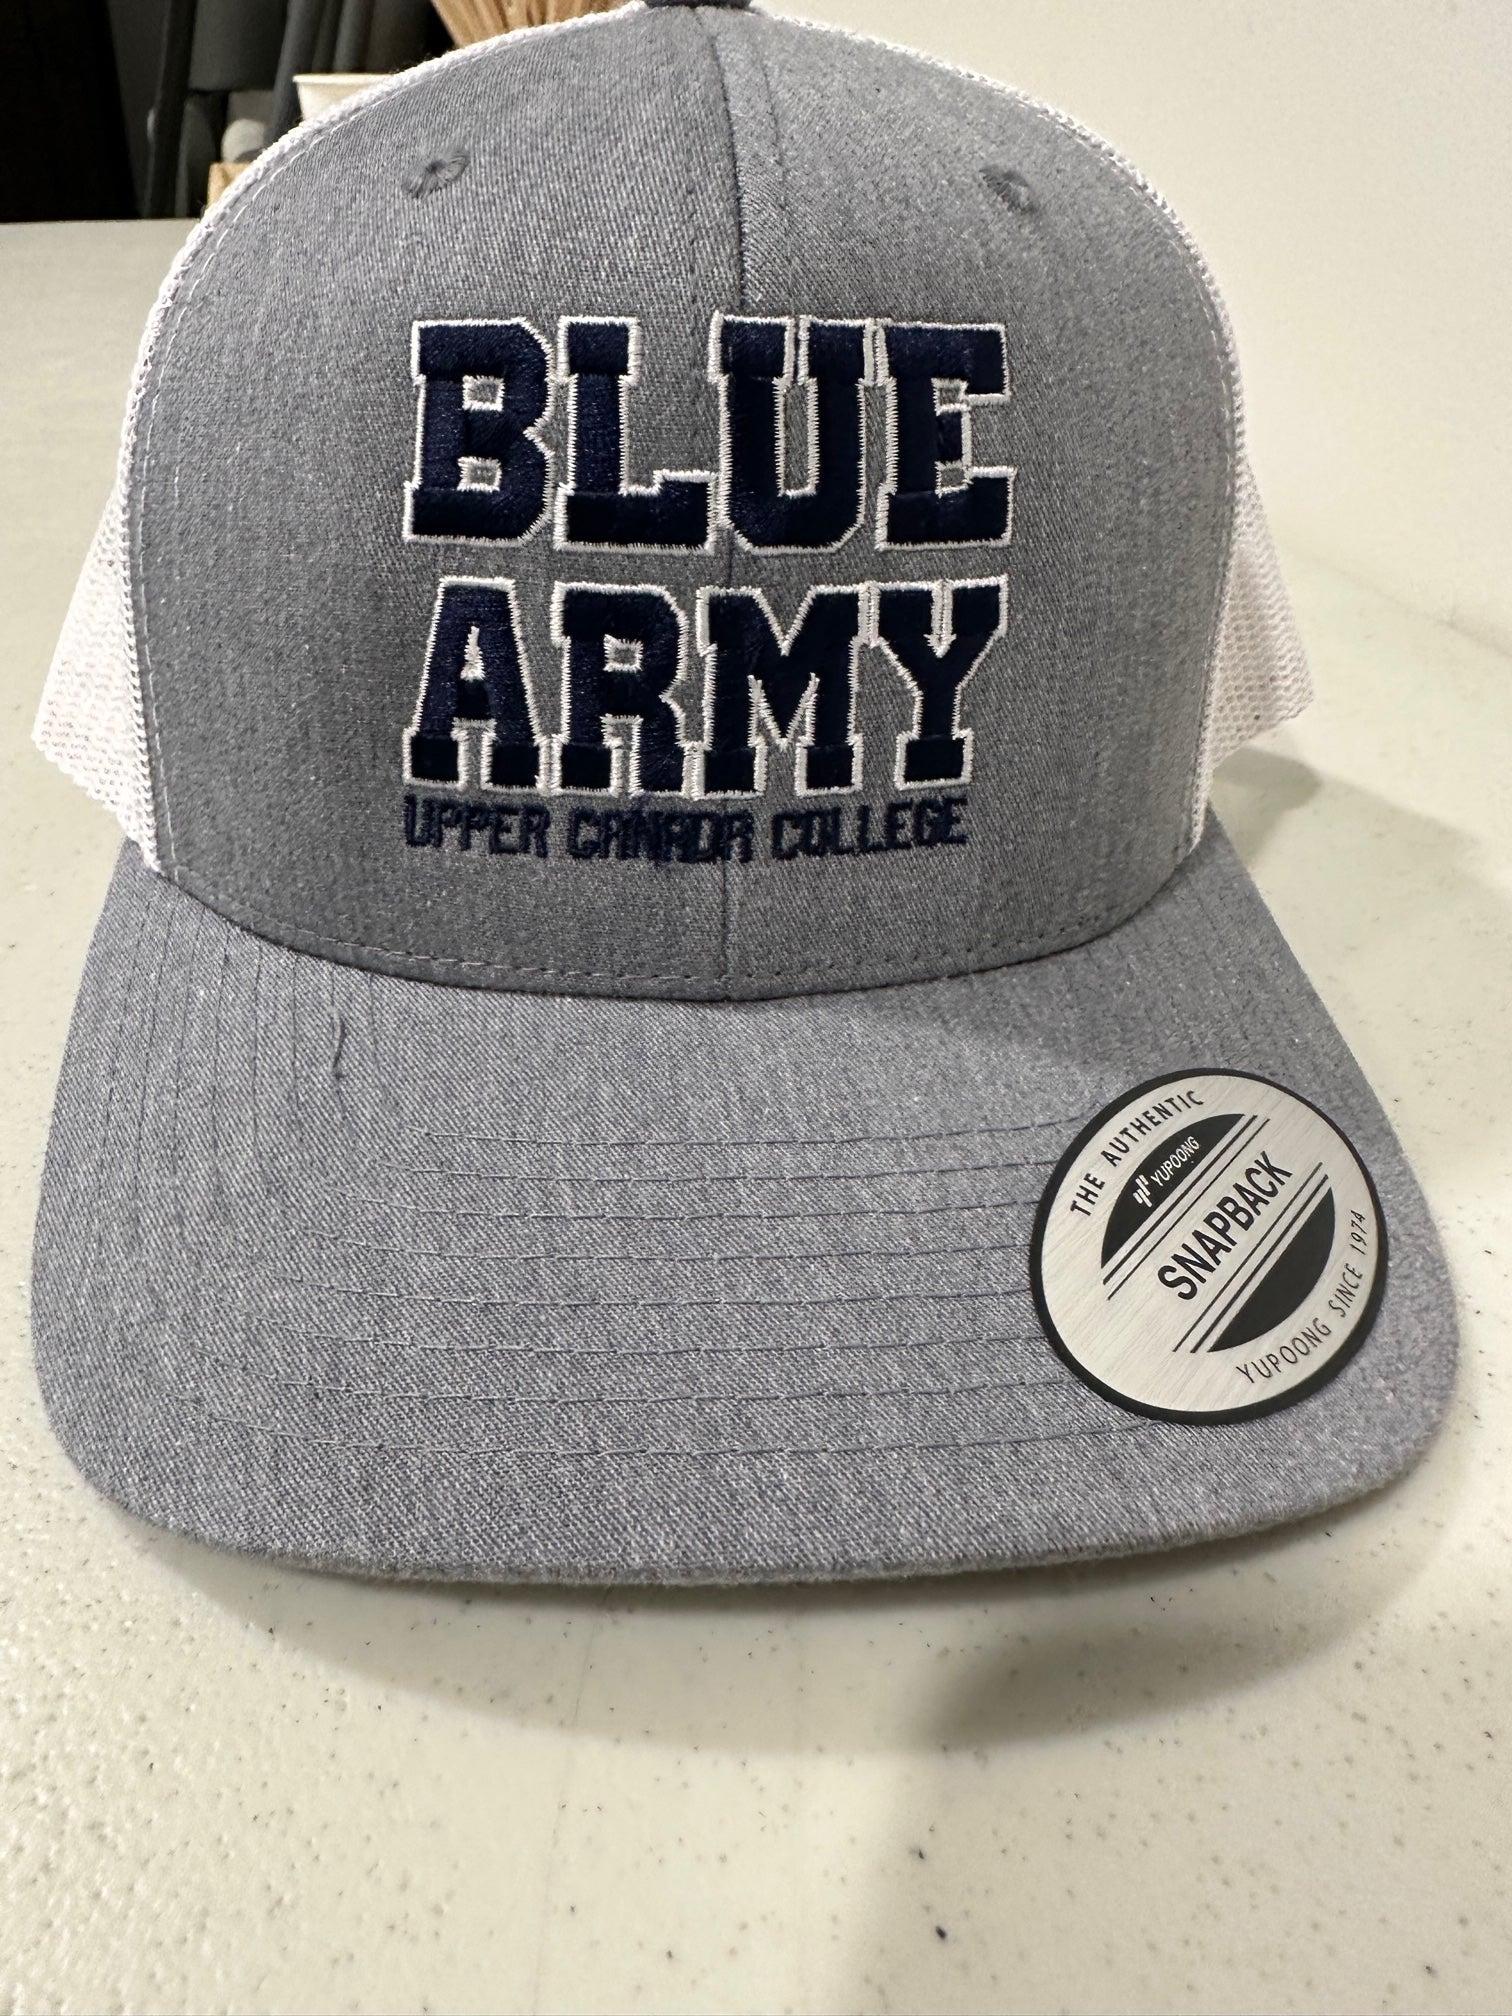 Grey trucker hat blue lettering - Blue Army